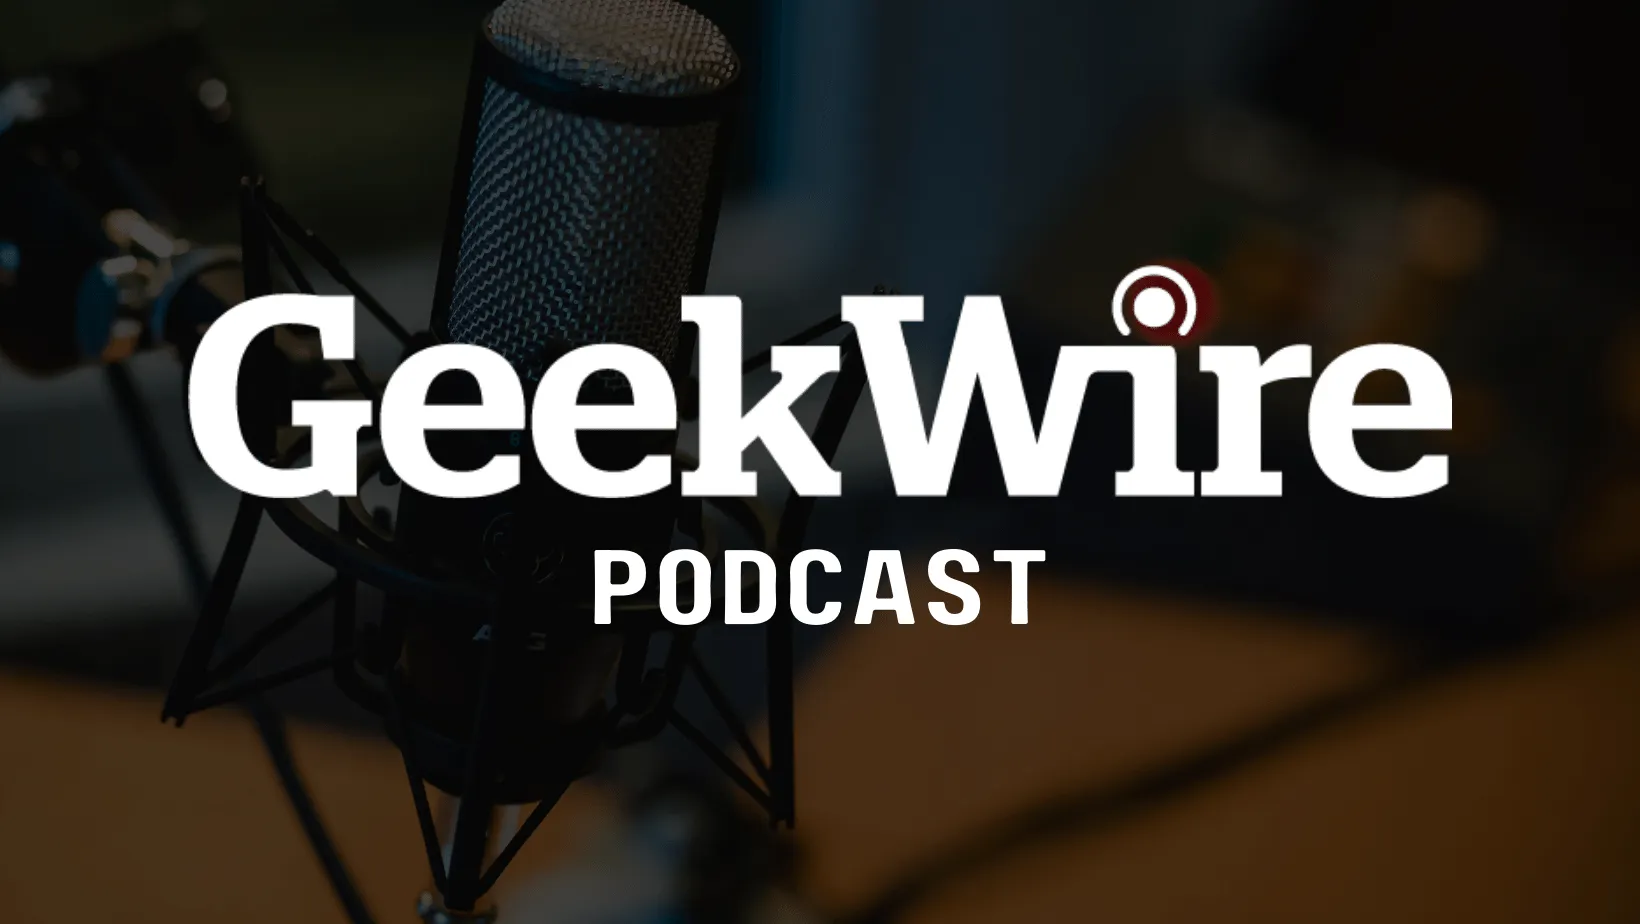 White GeekWire podcast logo over a dark background.